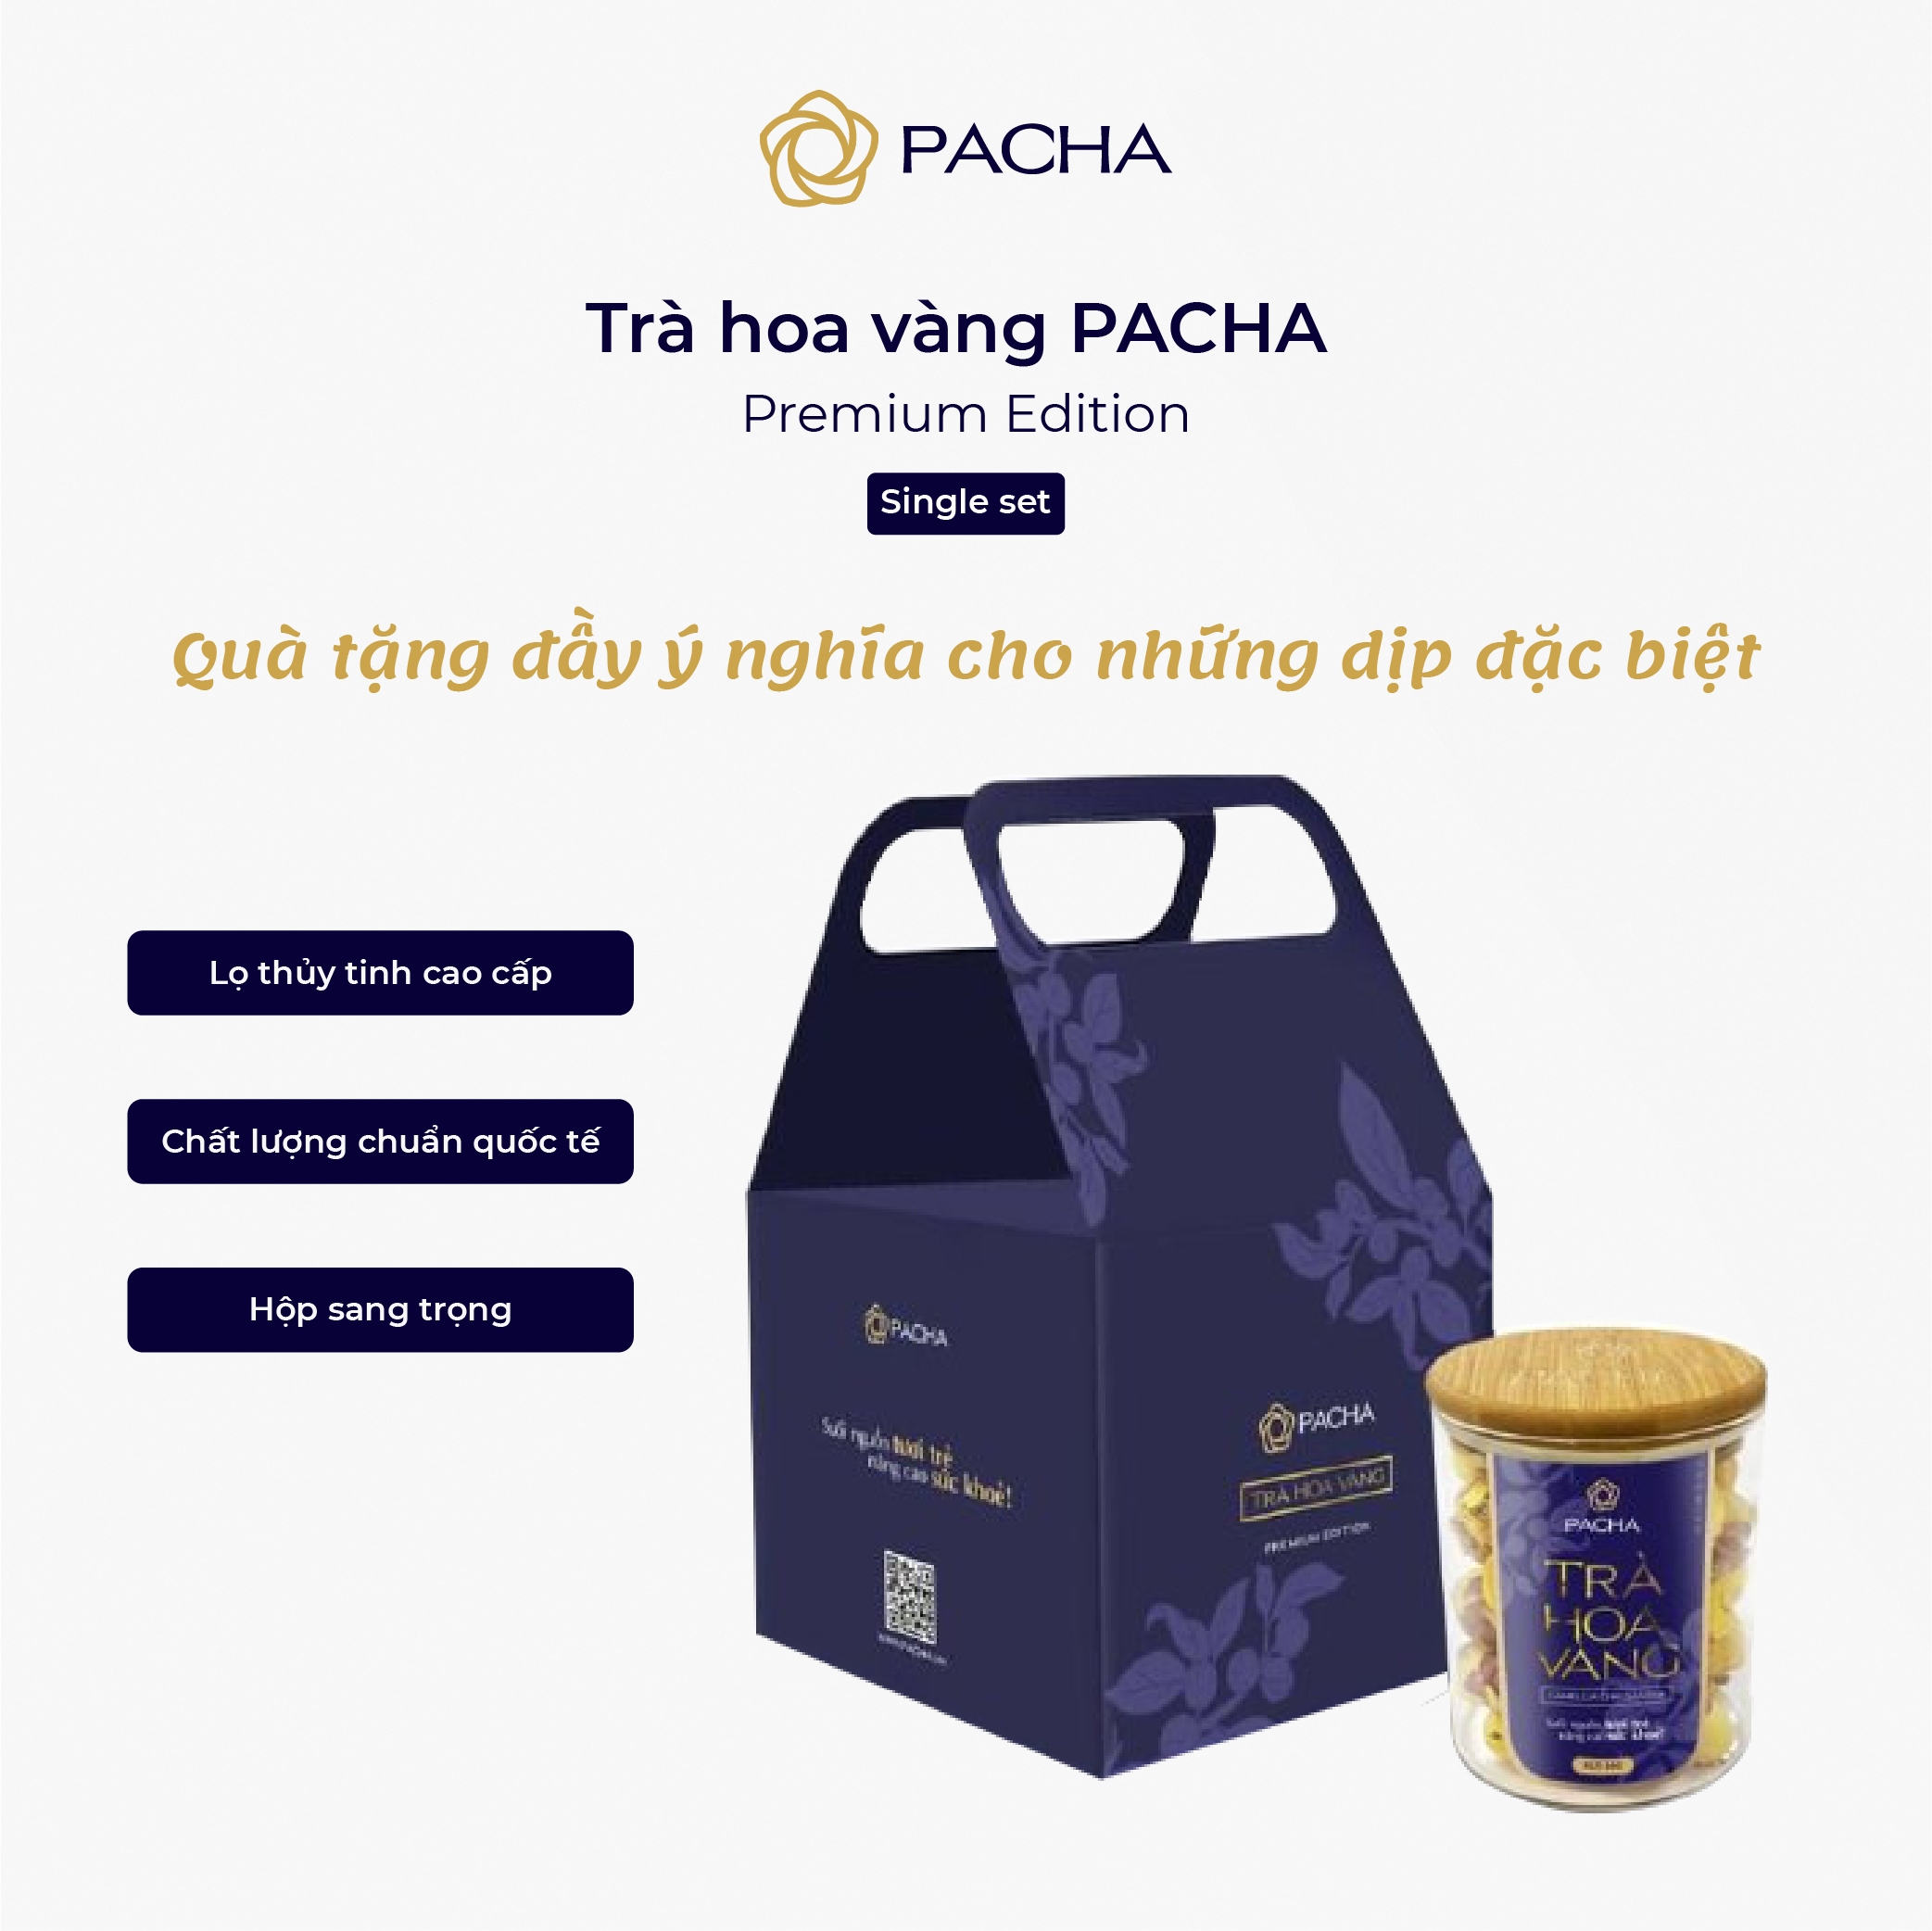 Trà hoa vàng PACHA Premium Edition